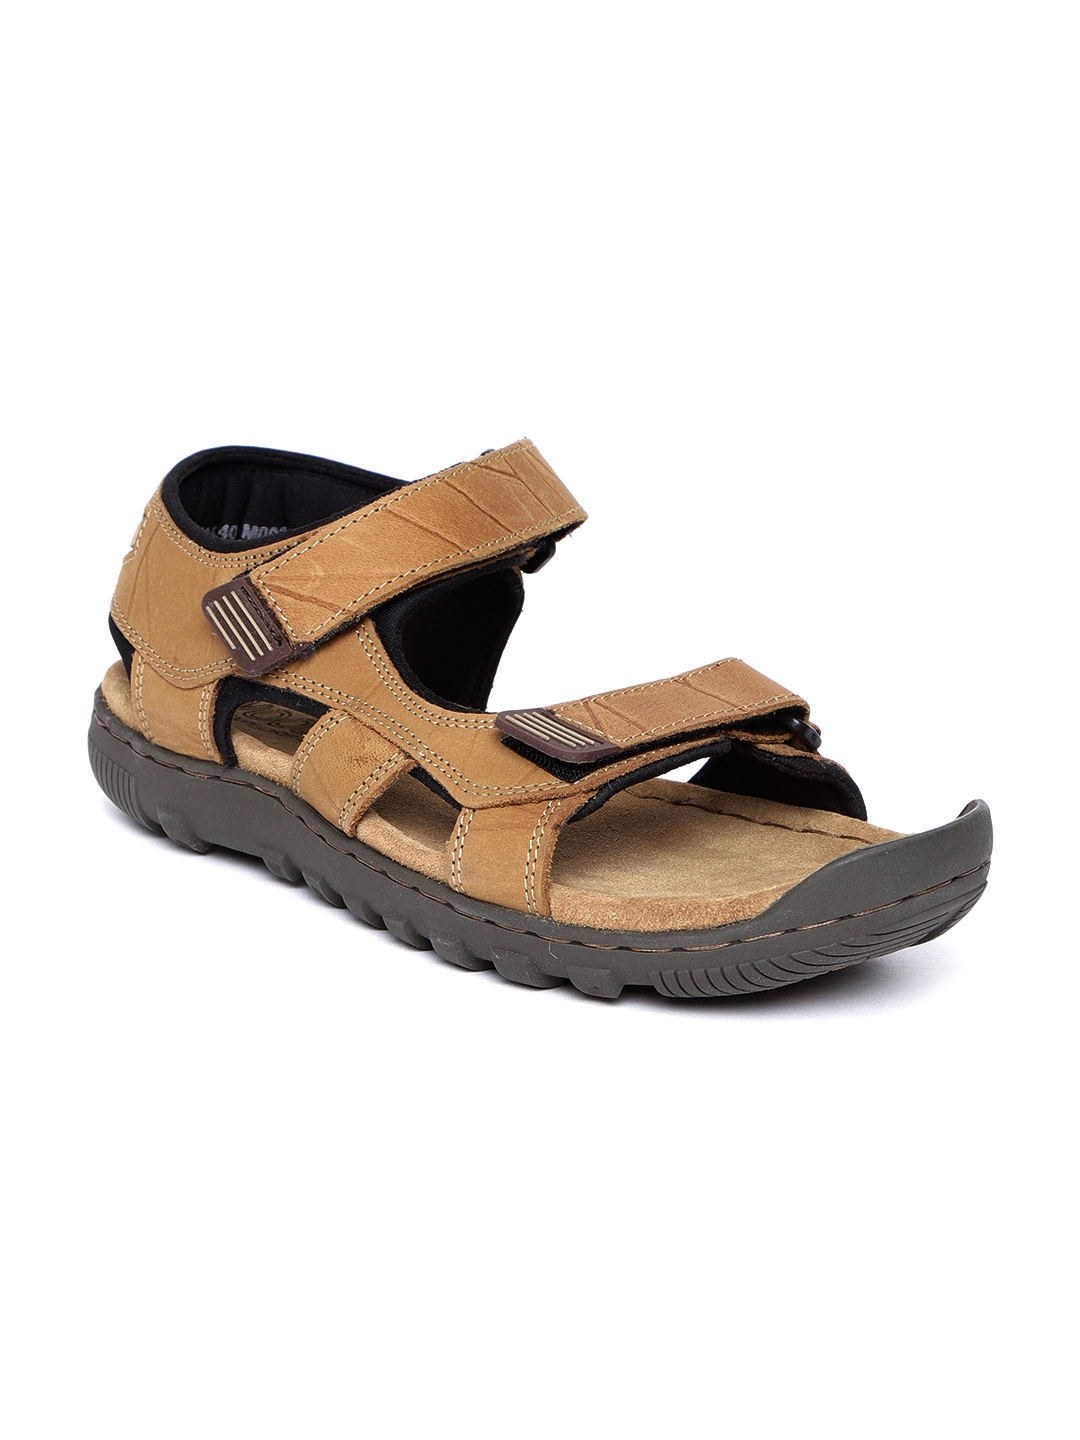 Cat Waylon outdoor sandal 725048 – Kooheji Industrial Safety